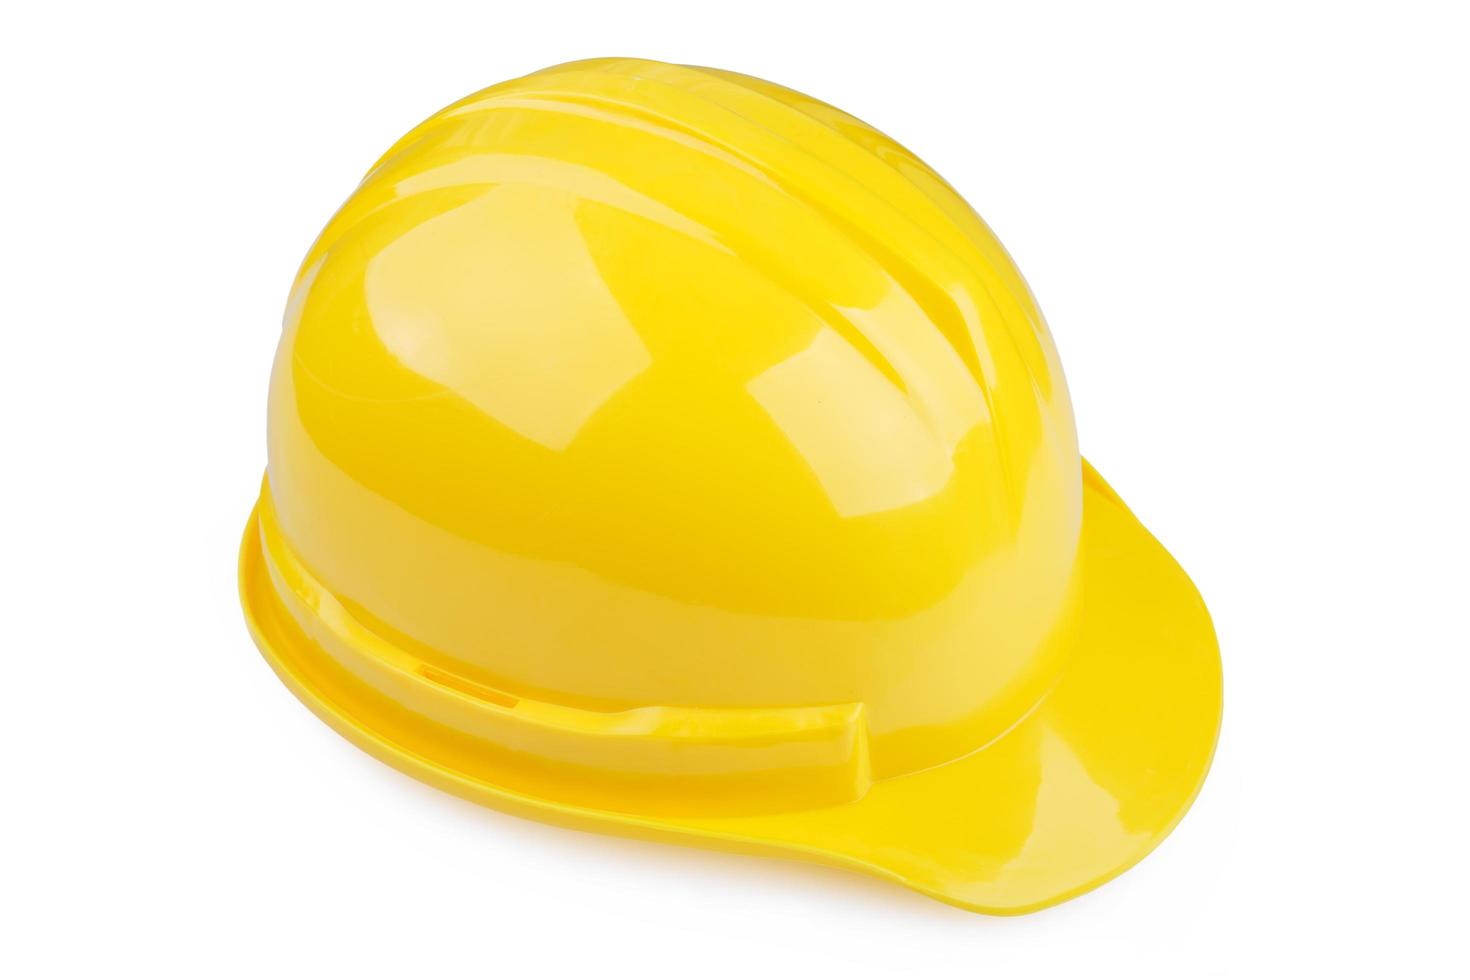 capacete de segurança amarelo sobre fundo branco foto